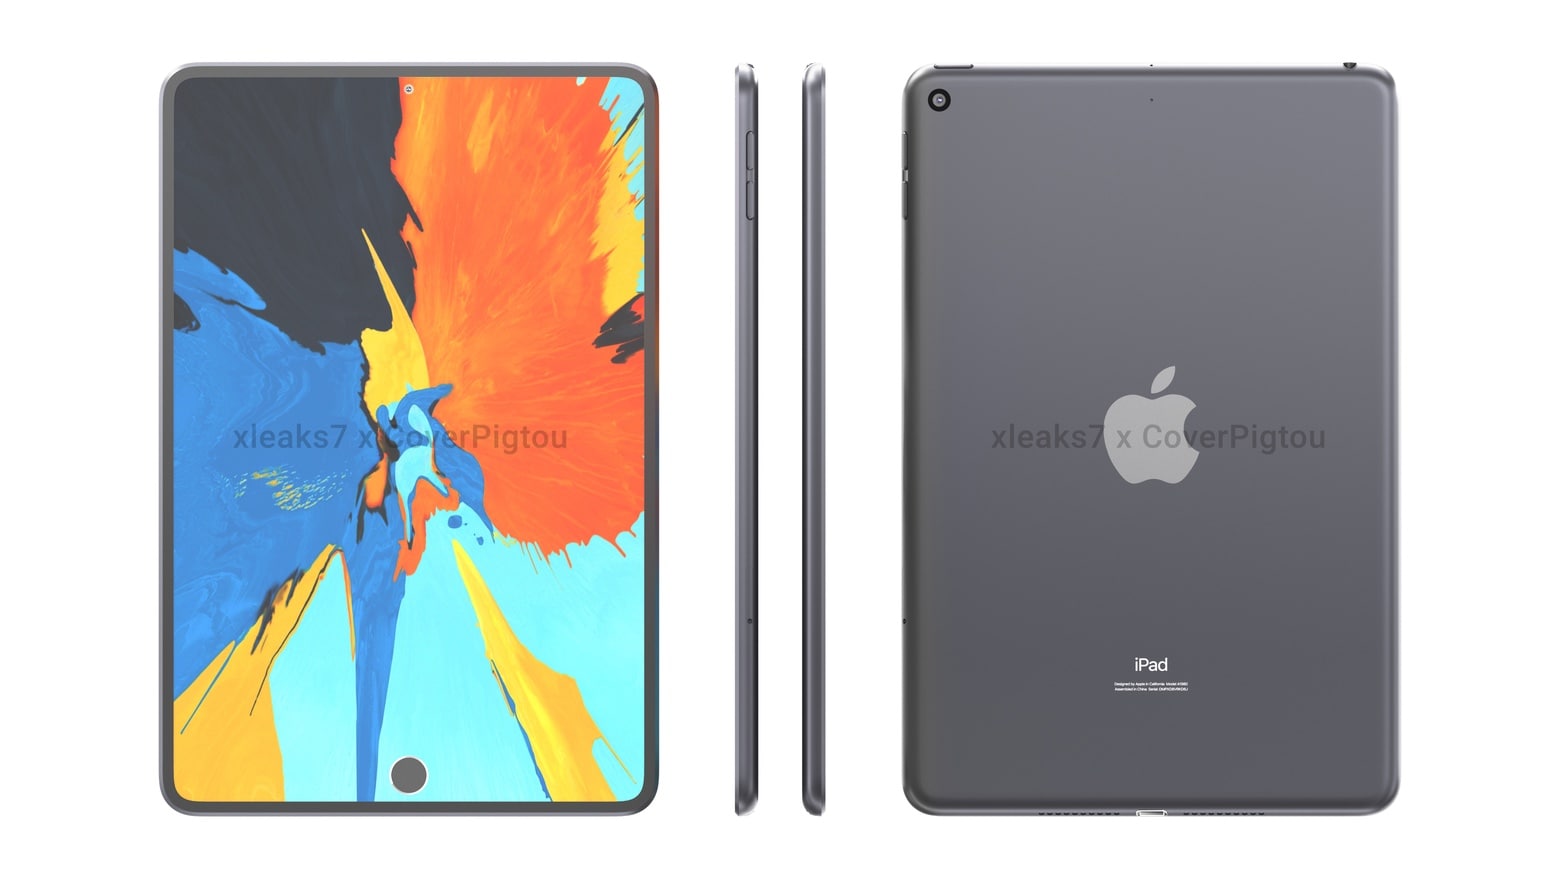 rumored iPad mini new design 2021